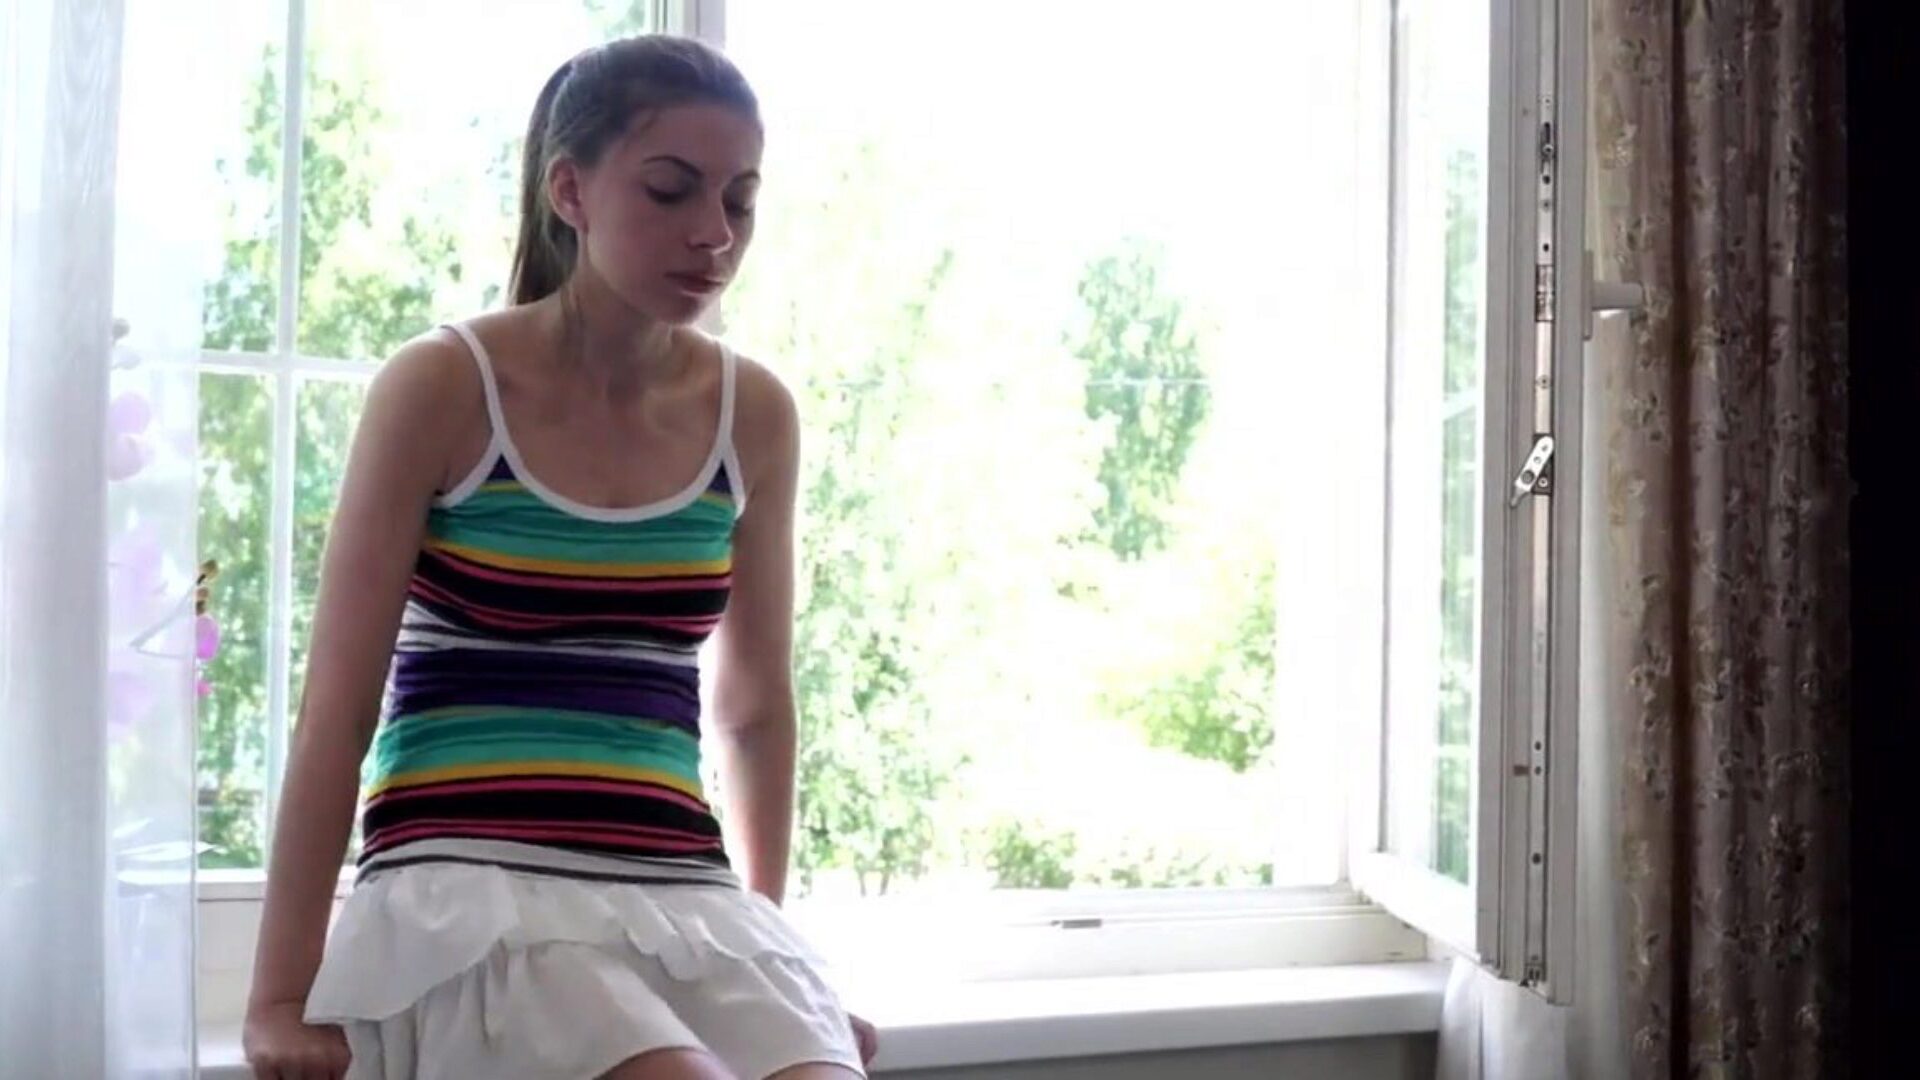 Berlin teens casual sex in Video Shows